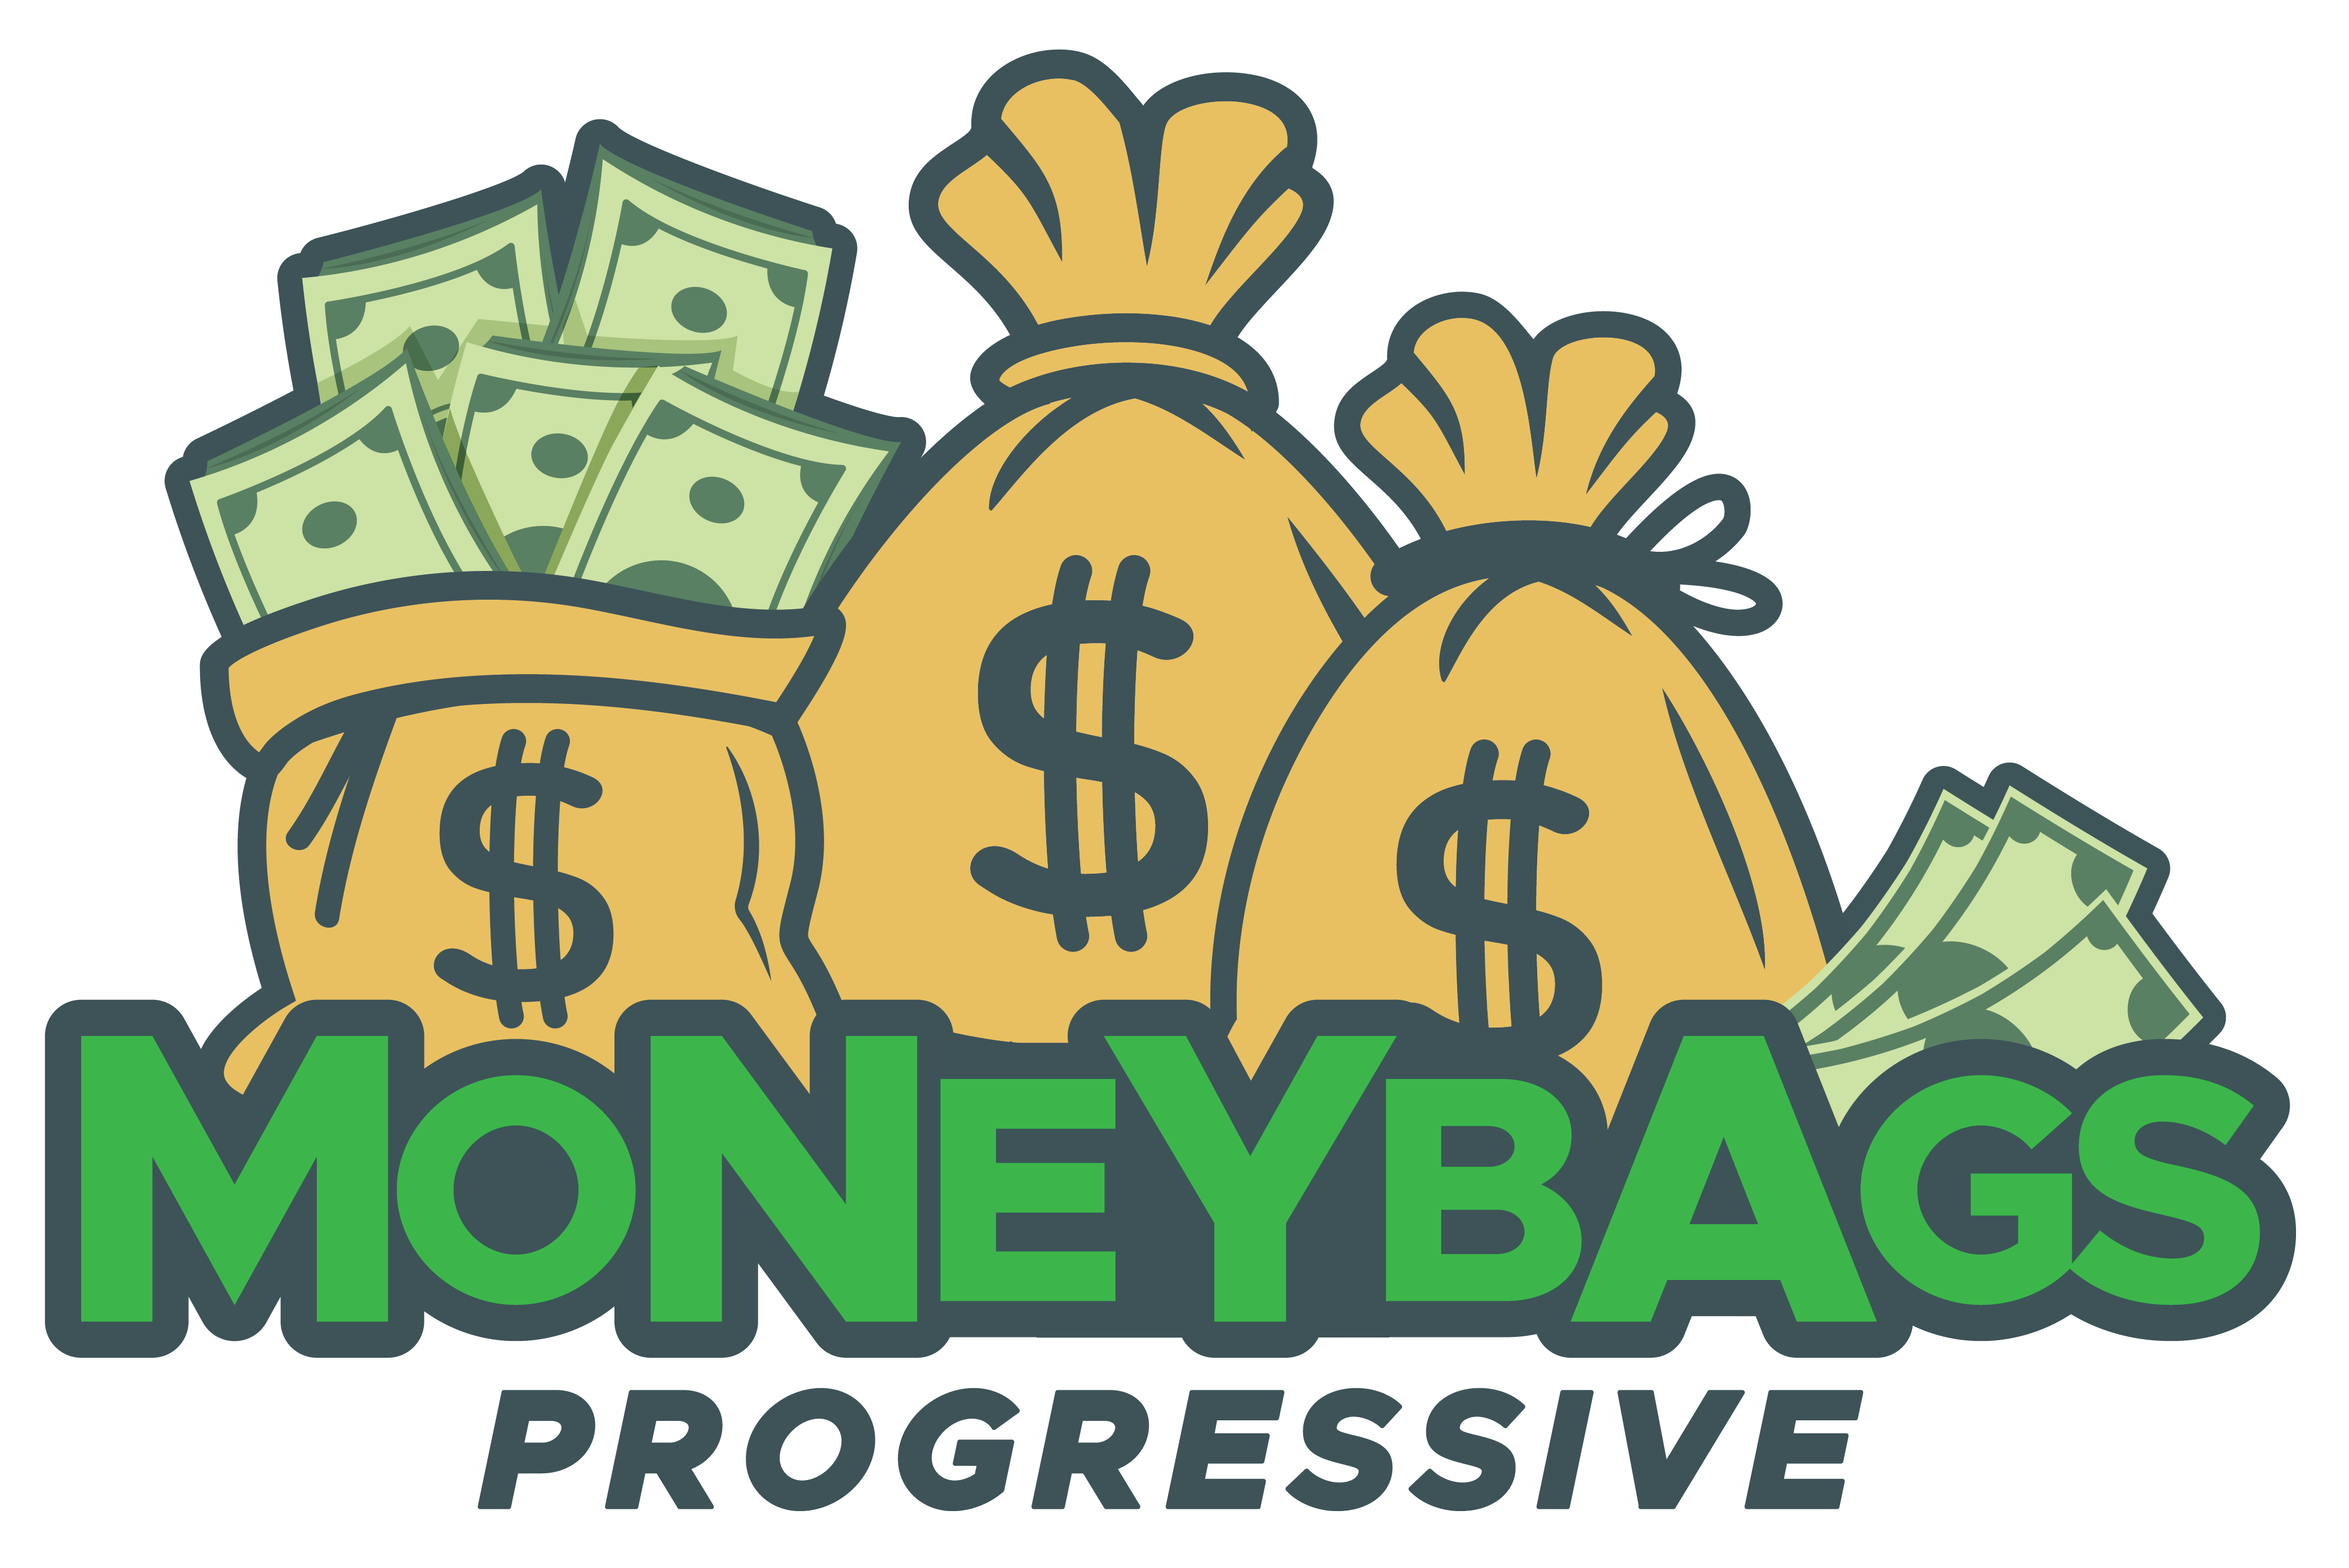 Fast Play Moneybags Progressive